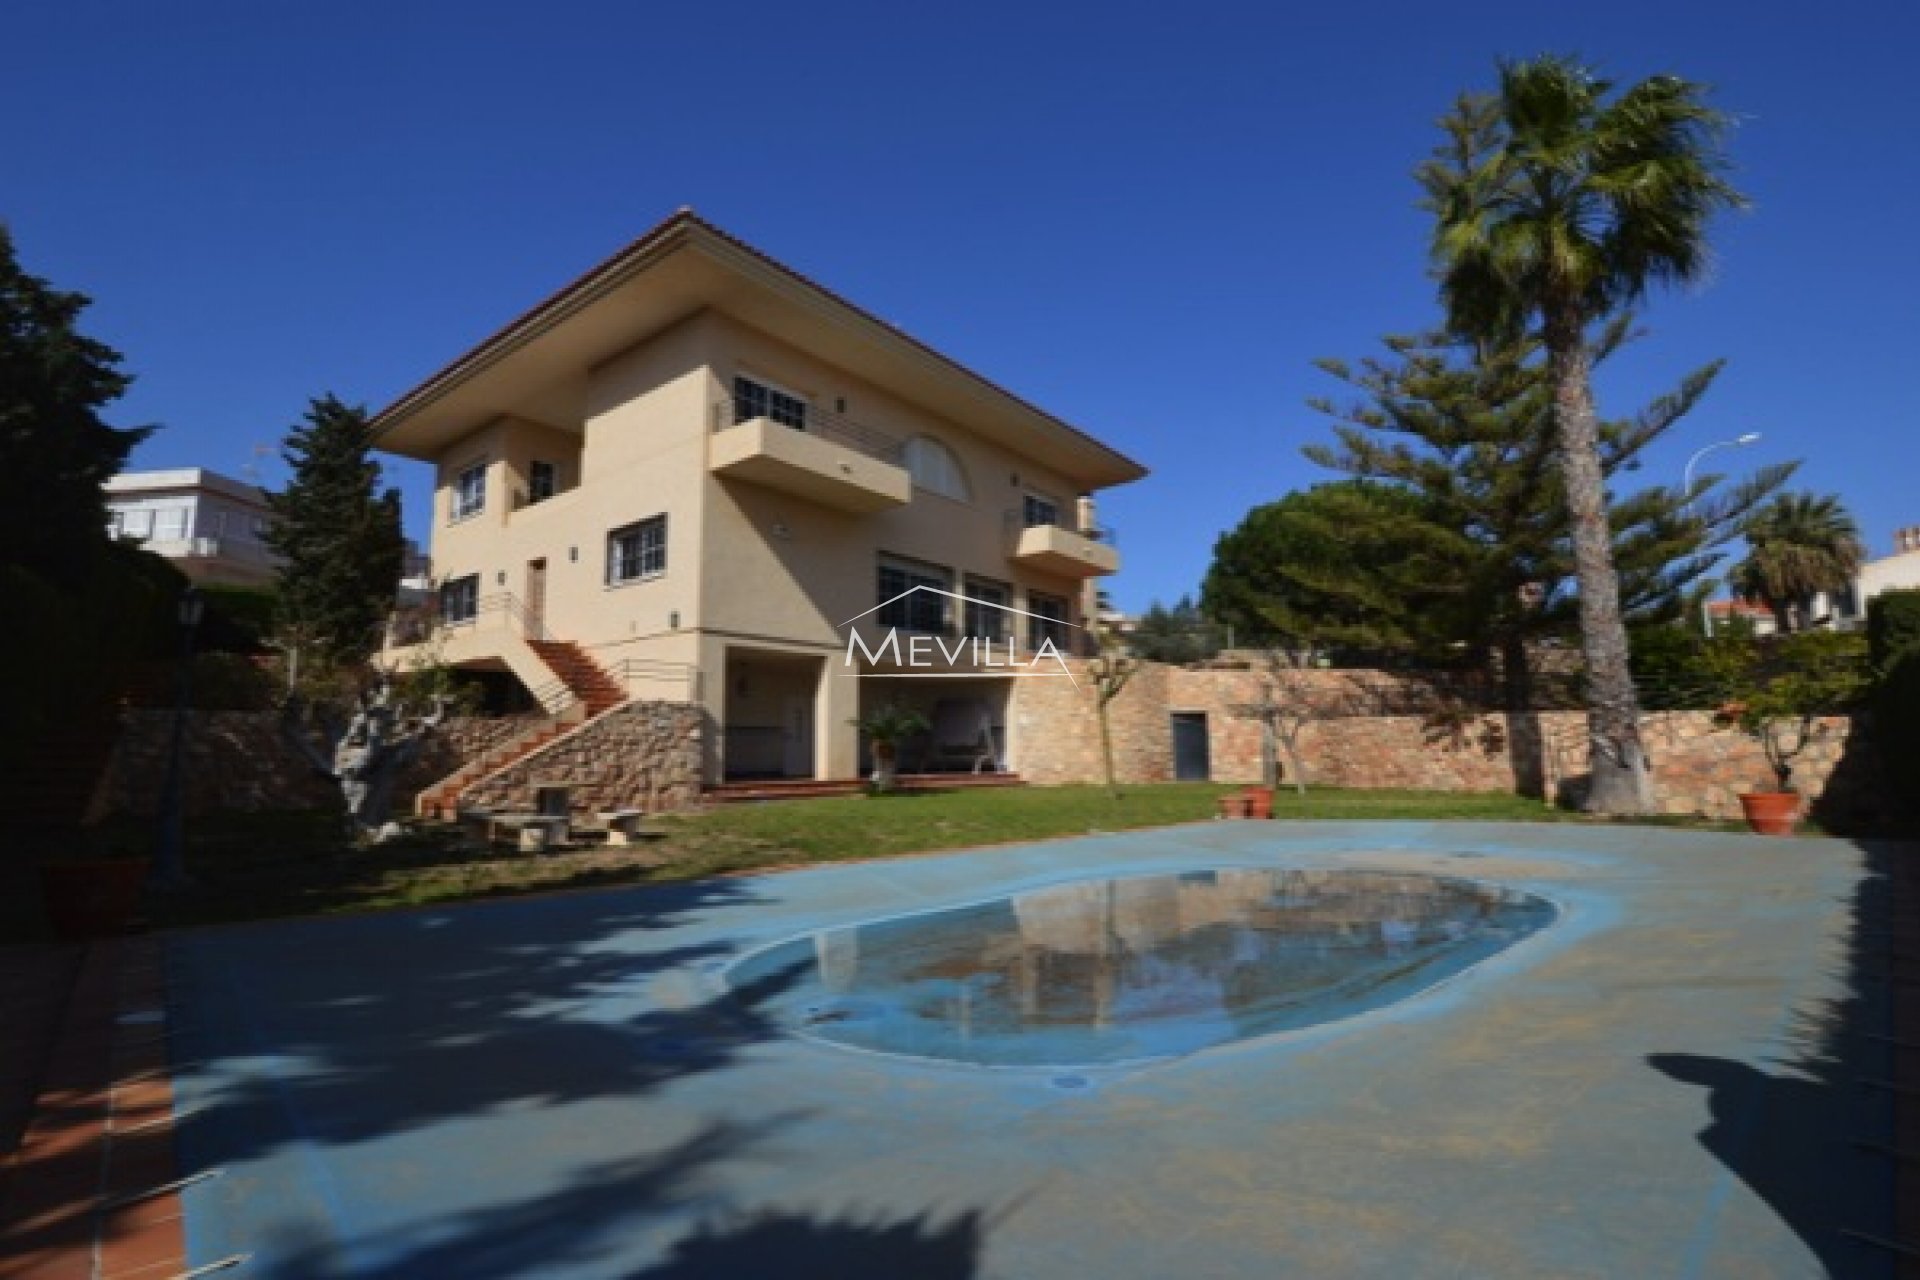 The villa with big swimming pool 